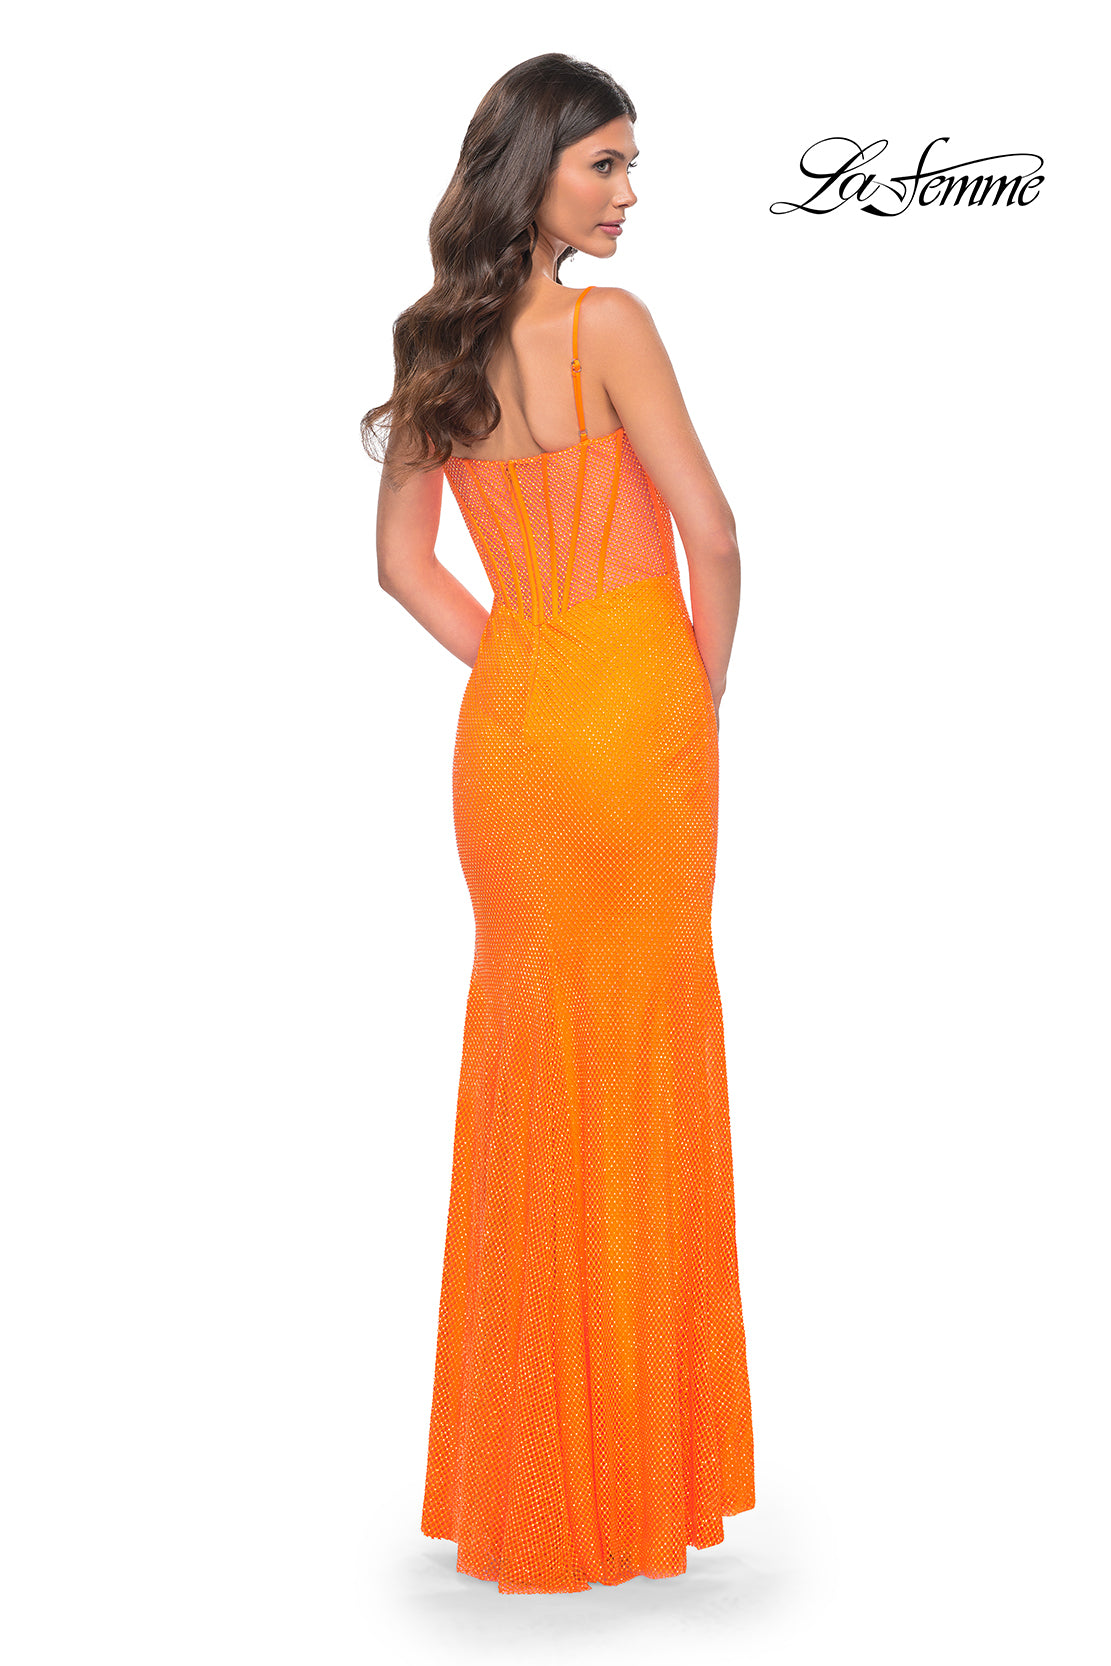 La-Femme-32427-V-Neck-Neckline-Zipper-Back-High-Slit-Hot-Stone-Fishnet-Fitted-Bright-Orange-Evening-Dress-B-Chic-Fashions-Prom-Dress